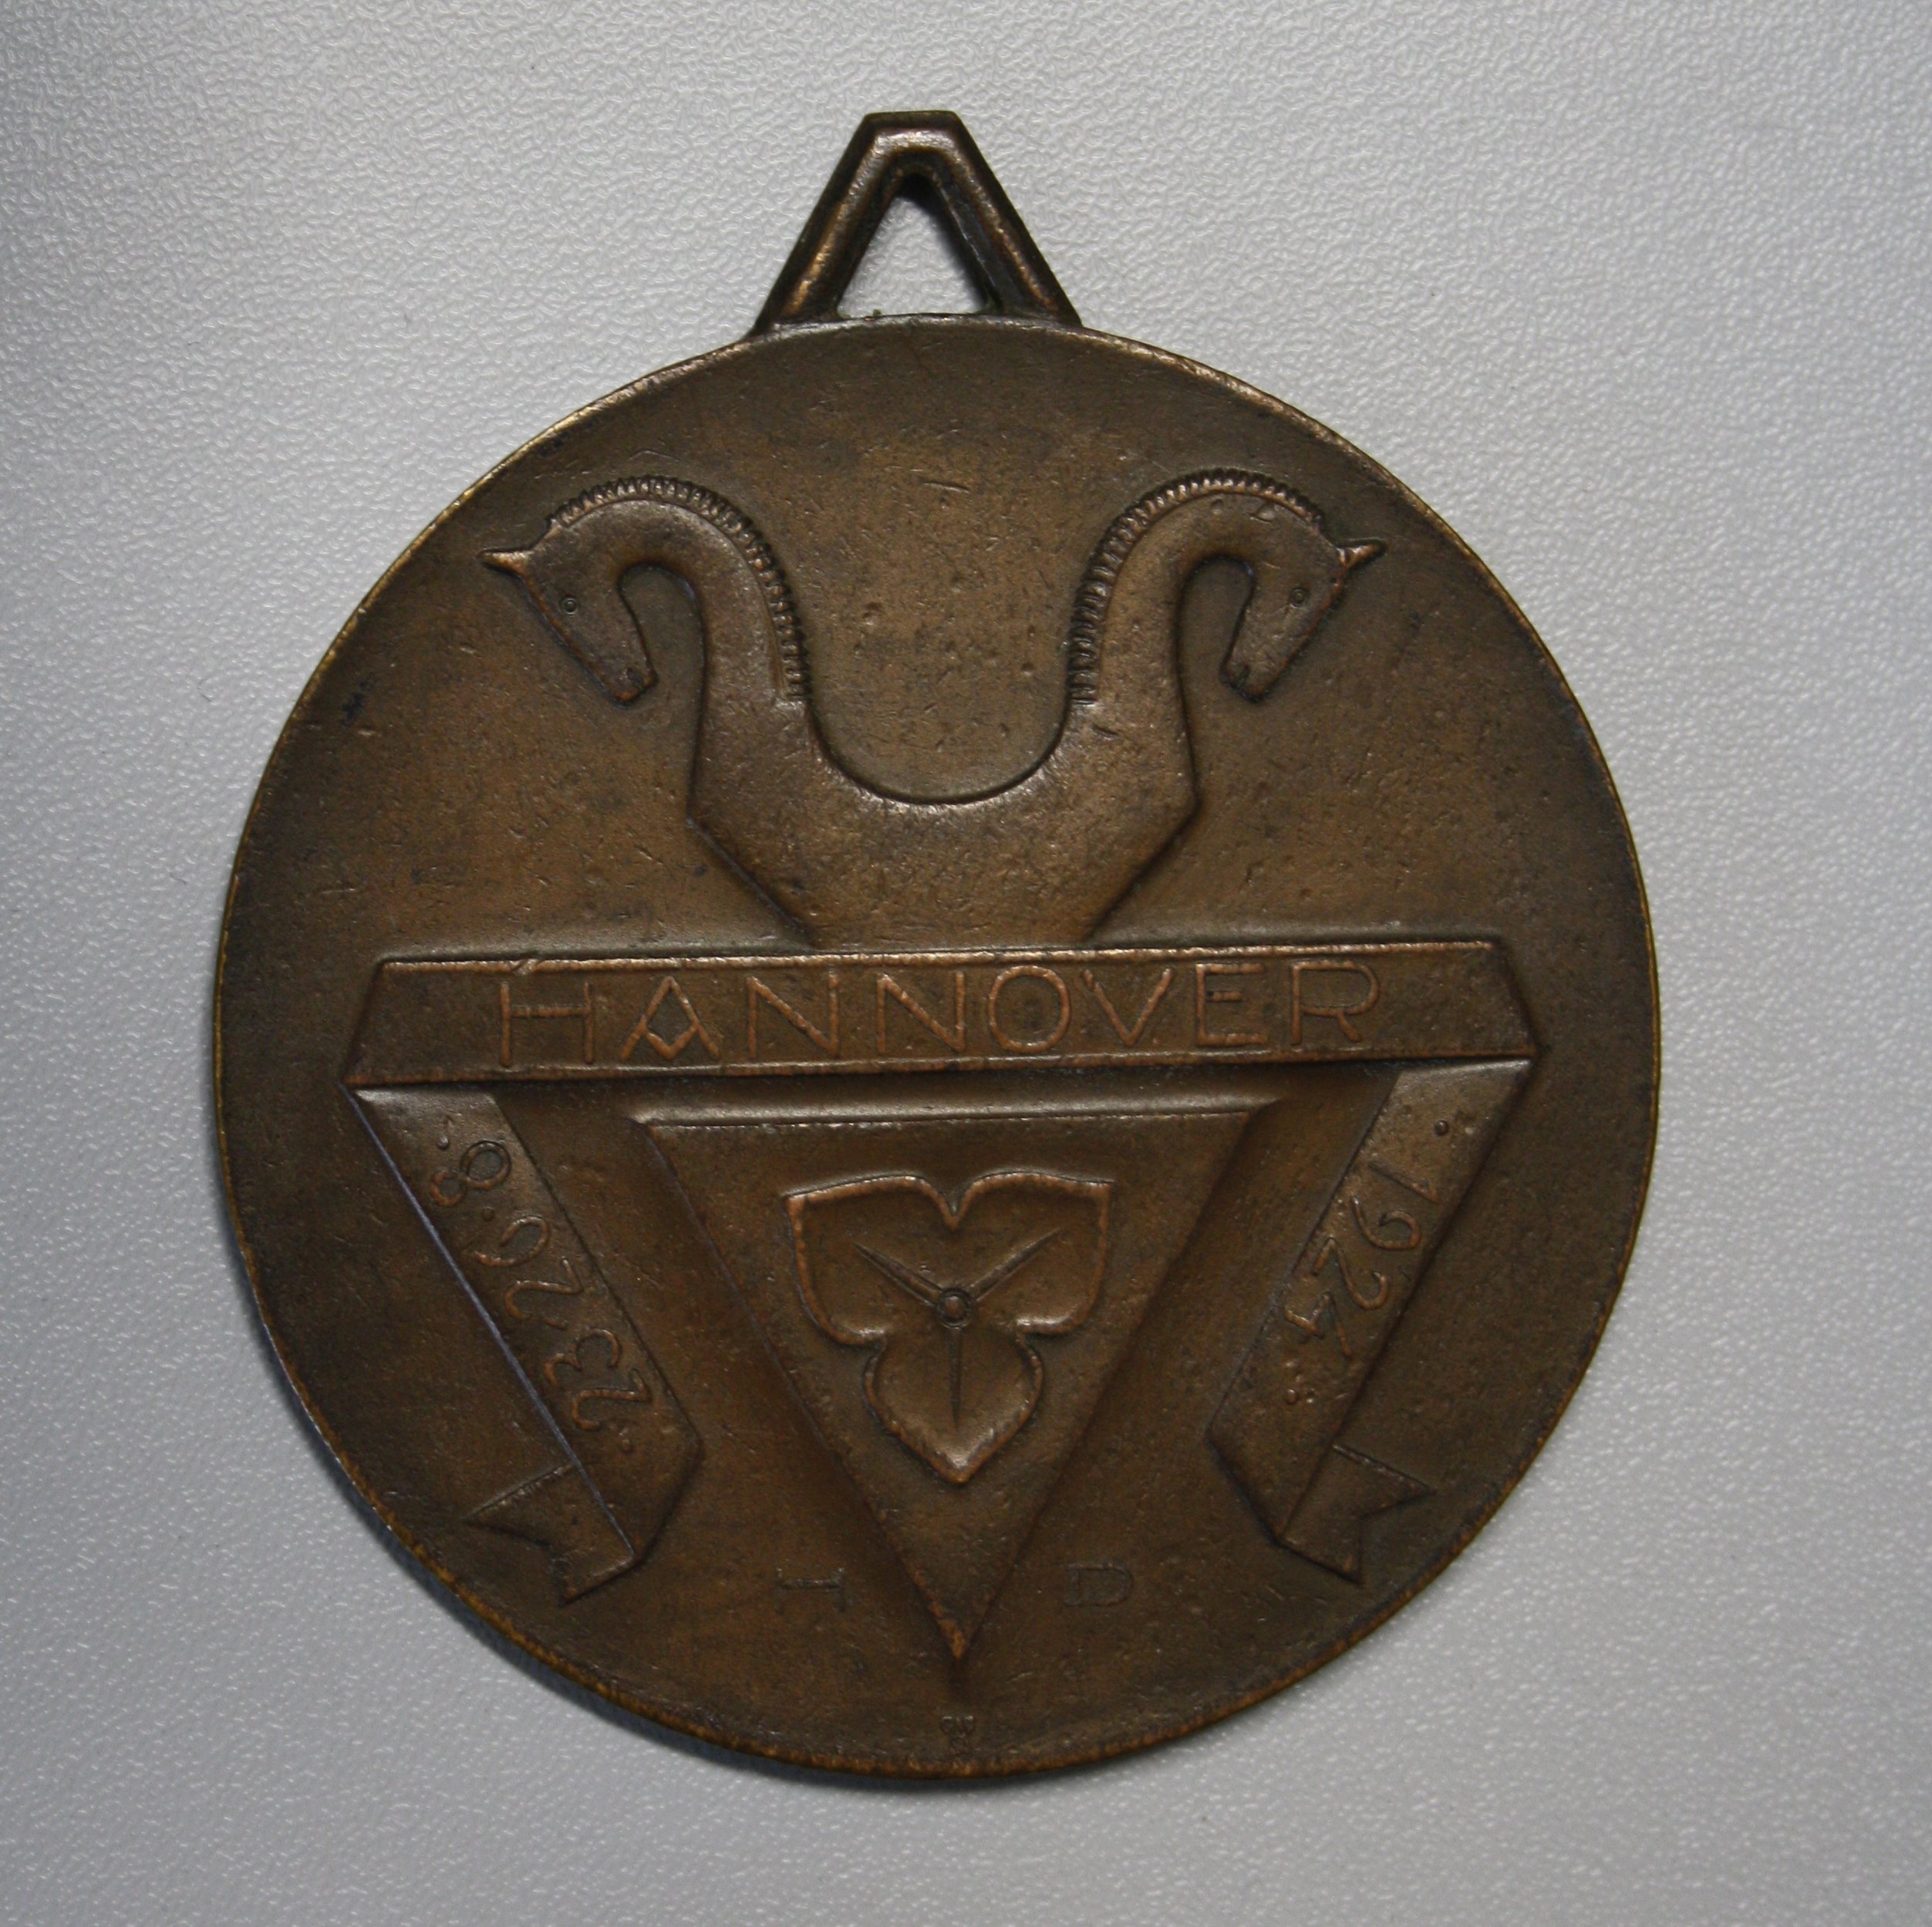 Medaille zum 9. Bundessängerfest Hannover 1924 (Spohr Museum CC BY-NC-SA)